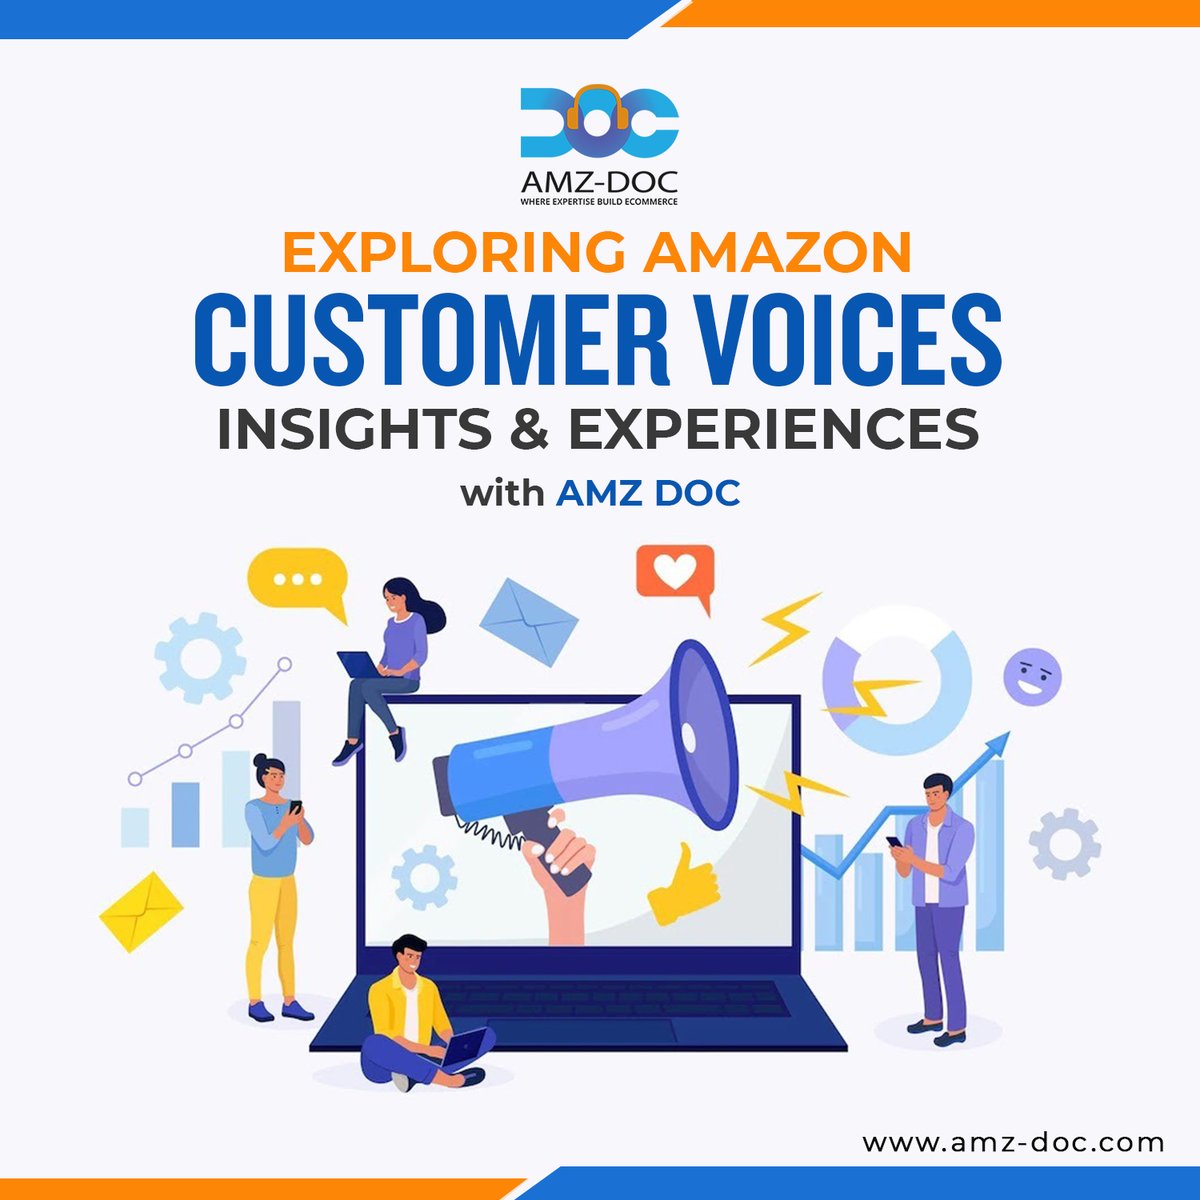 Exploring Amazon Customer Voices  Insights & Experiences with Amz Doc!

#AmzDoc #AmazonReviews #CustomerFeedback #ProductInsights #OnlineShopping #ConsumerOpinions